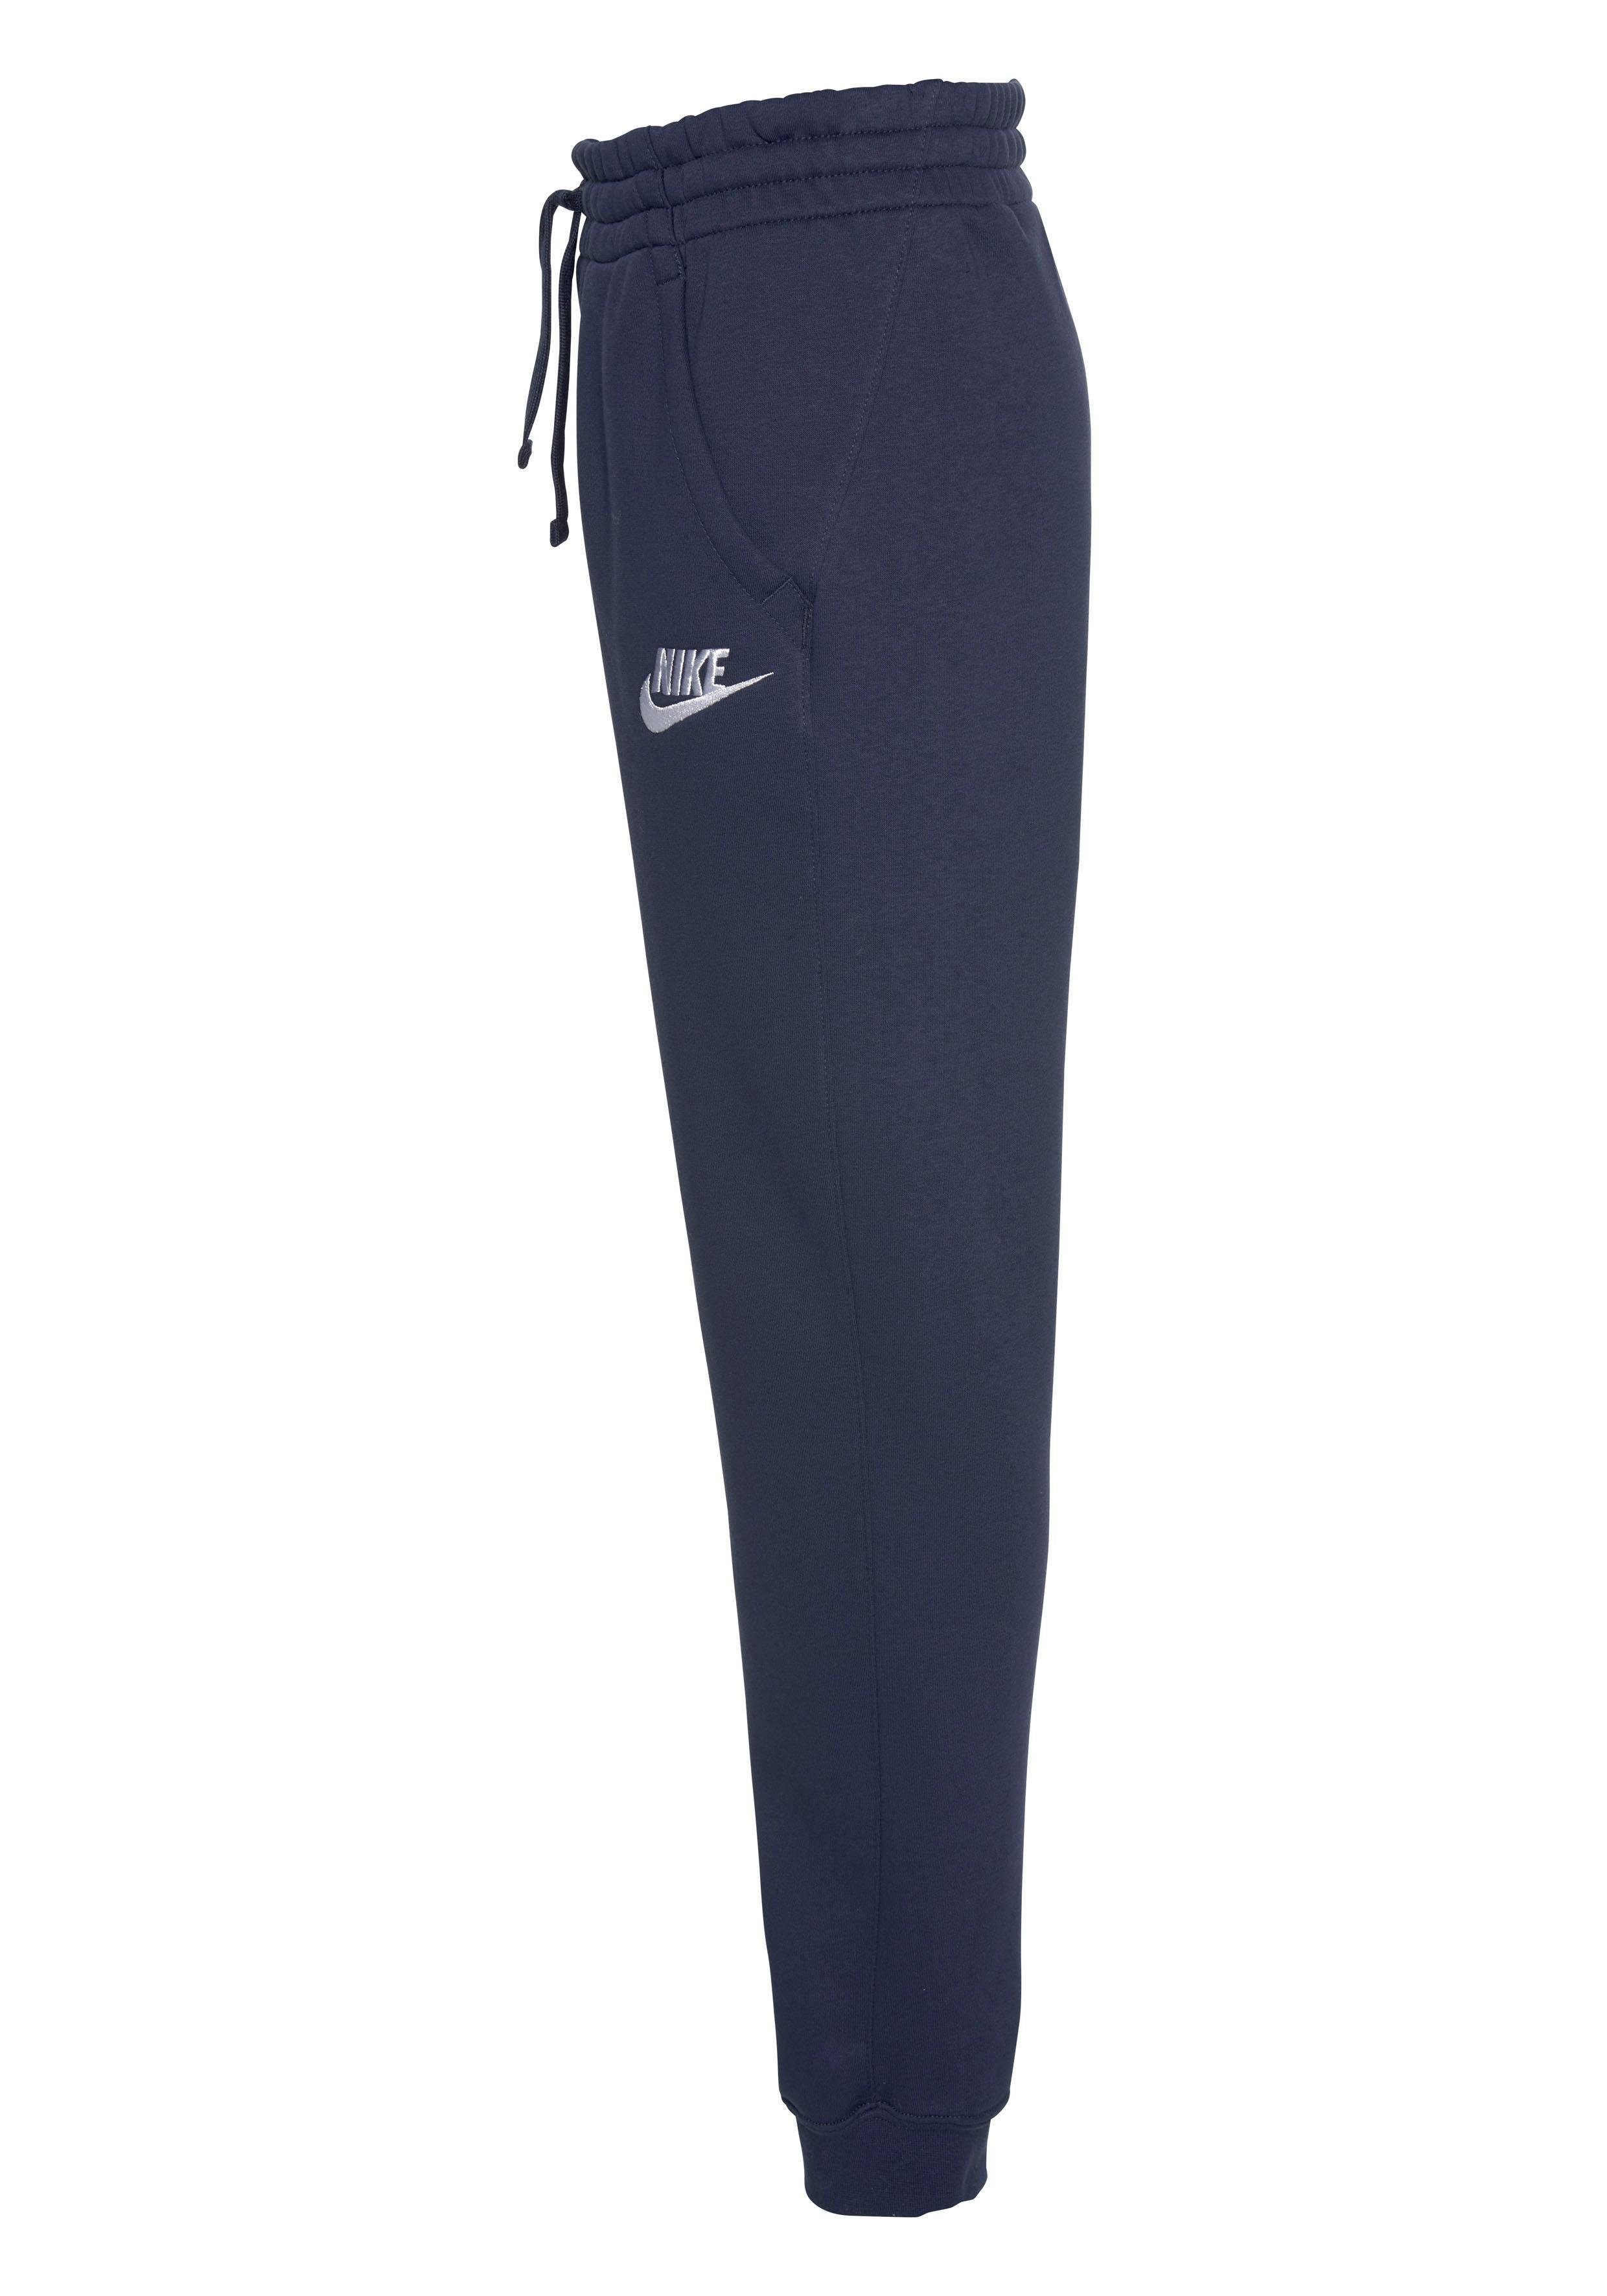 B NSW CLUB FLEECE Sportswear PANT Nike Jogginghose JOGGER dunkelblau